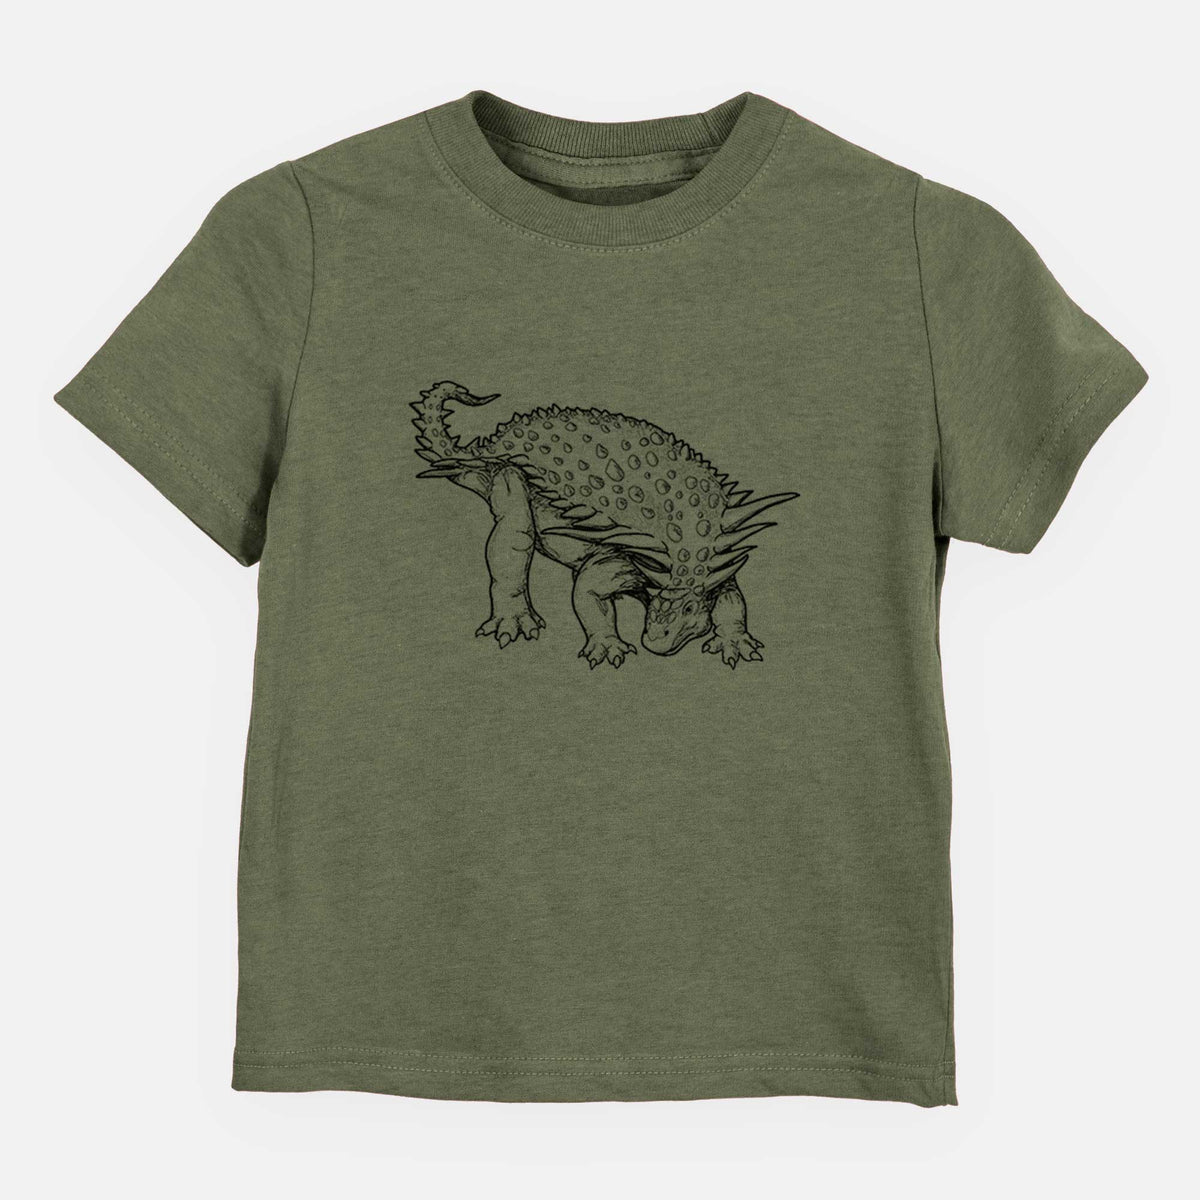 Nodosaurus Textilis - Kids Shirt